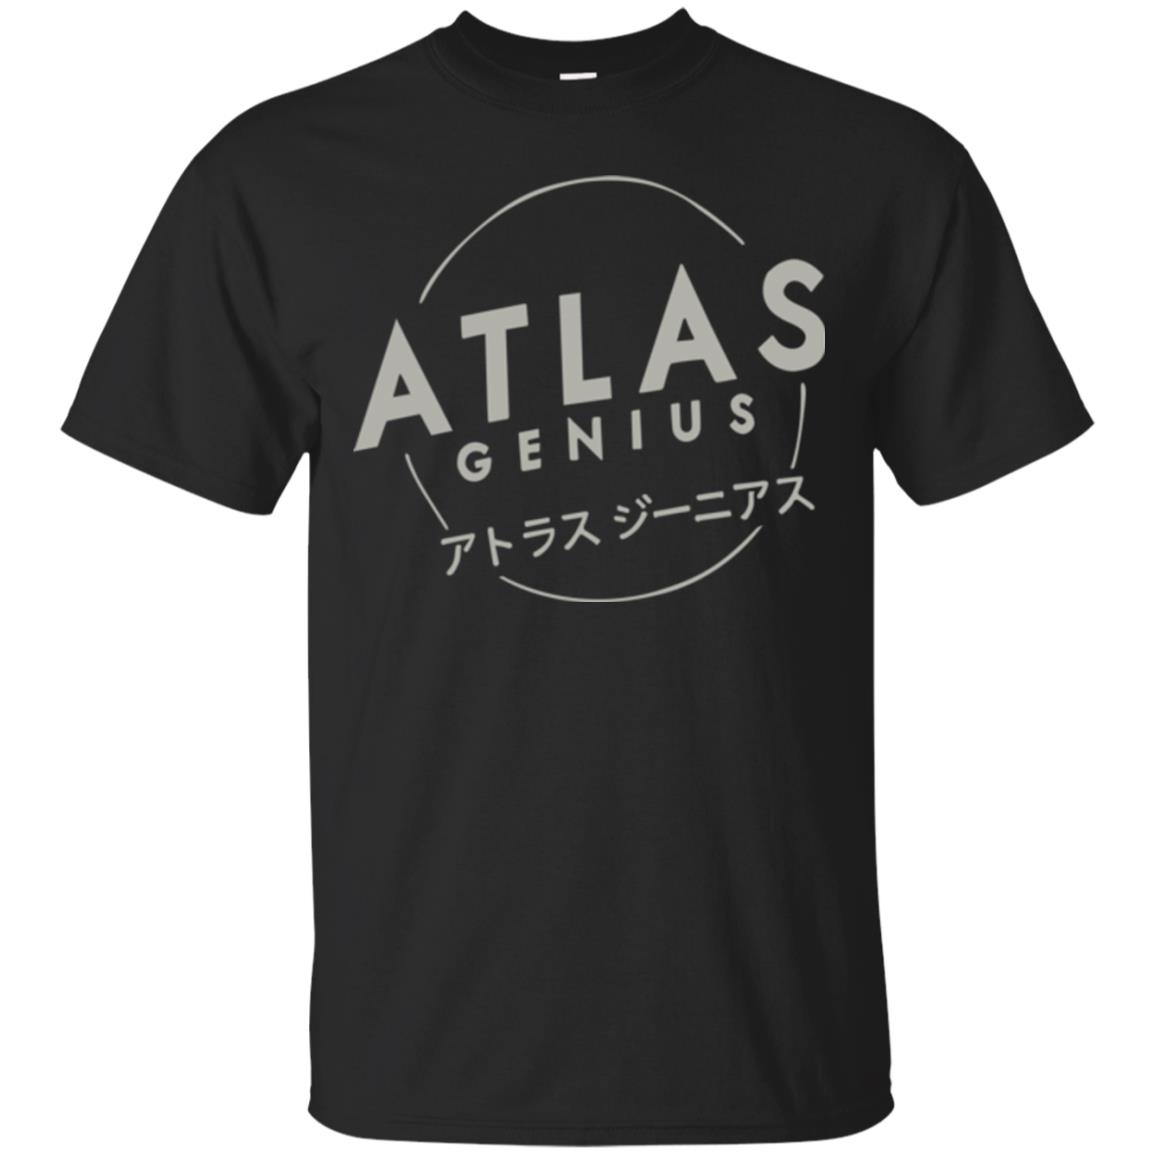 atlas genius shirt - black